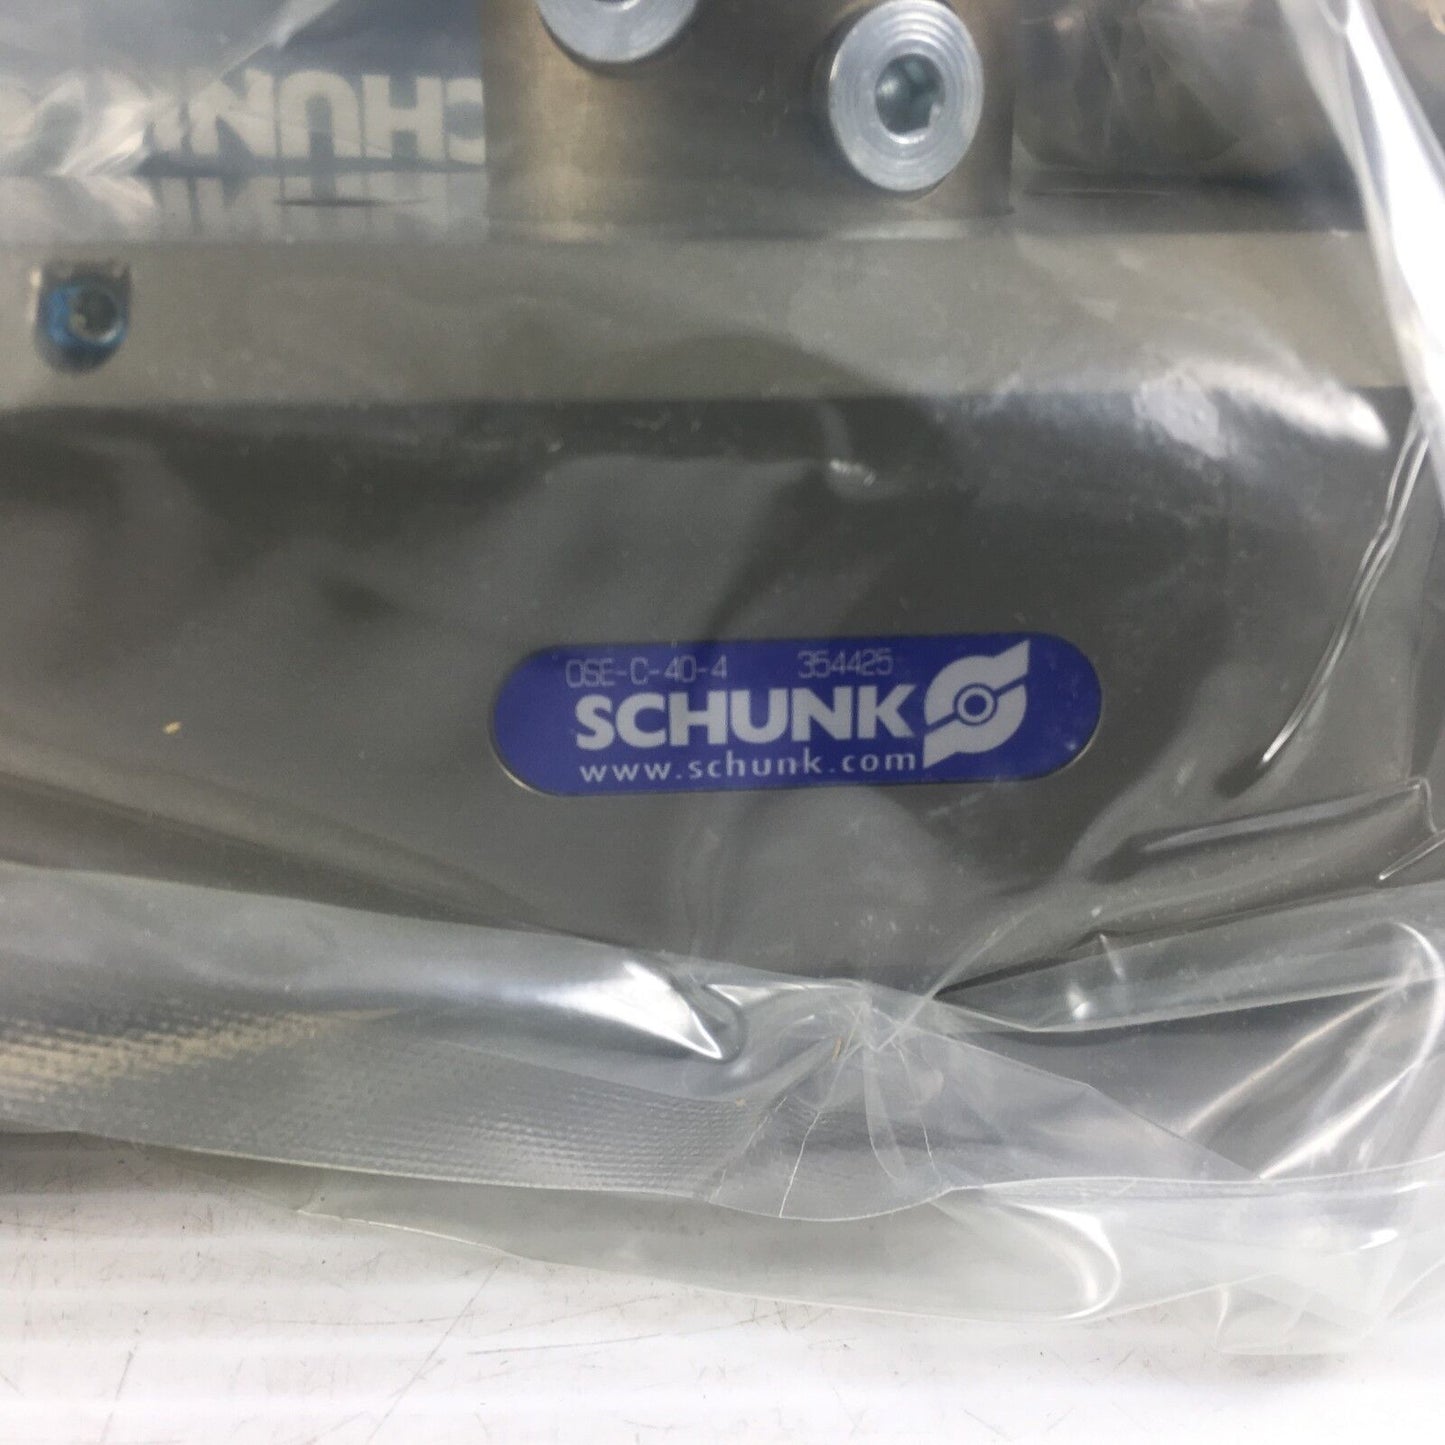 Schunk OSE-C40-4 | 0354425 | 354425 Swivel Unit